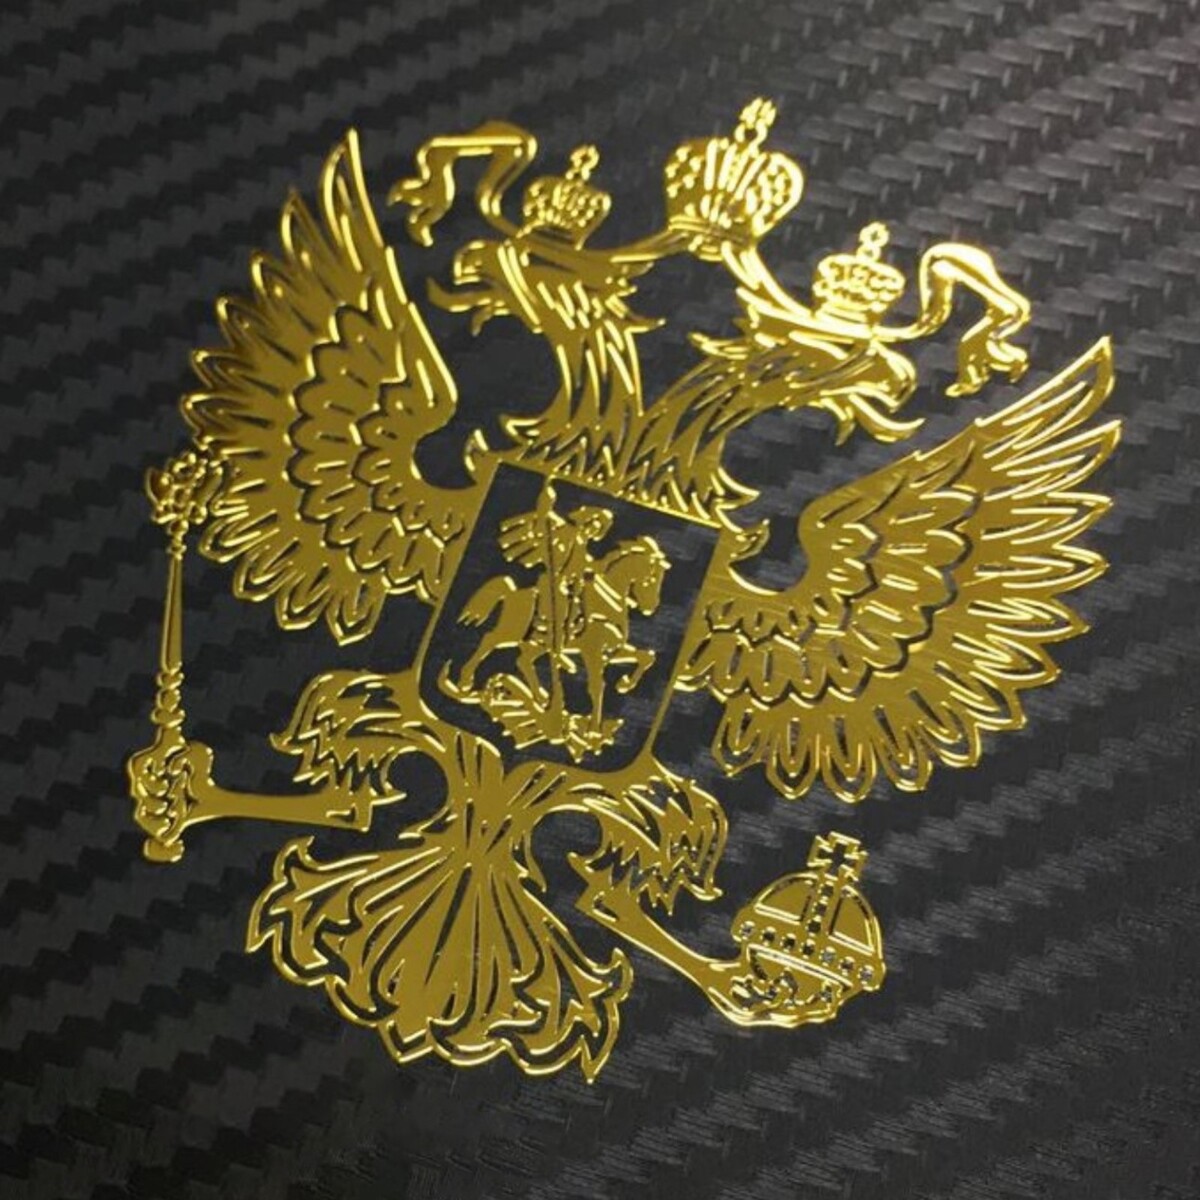 Наклейка на авто сувенир минимакс наклейка заливная патриотическая герб спб